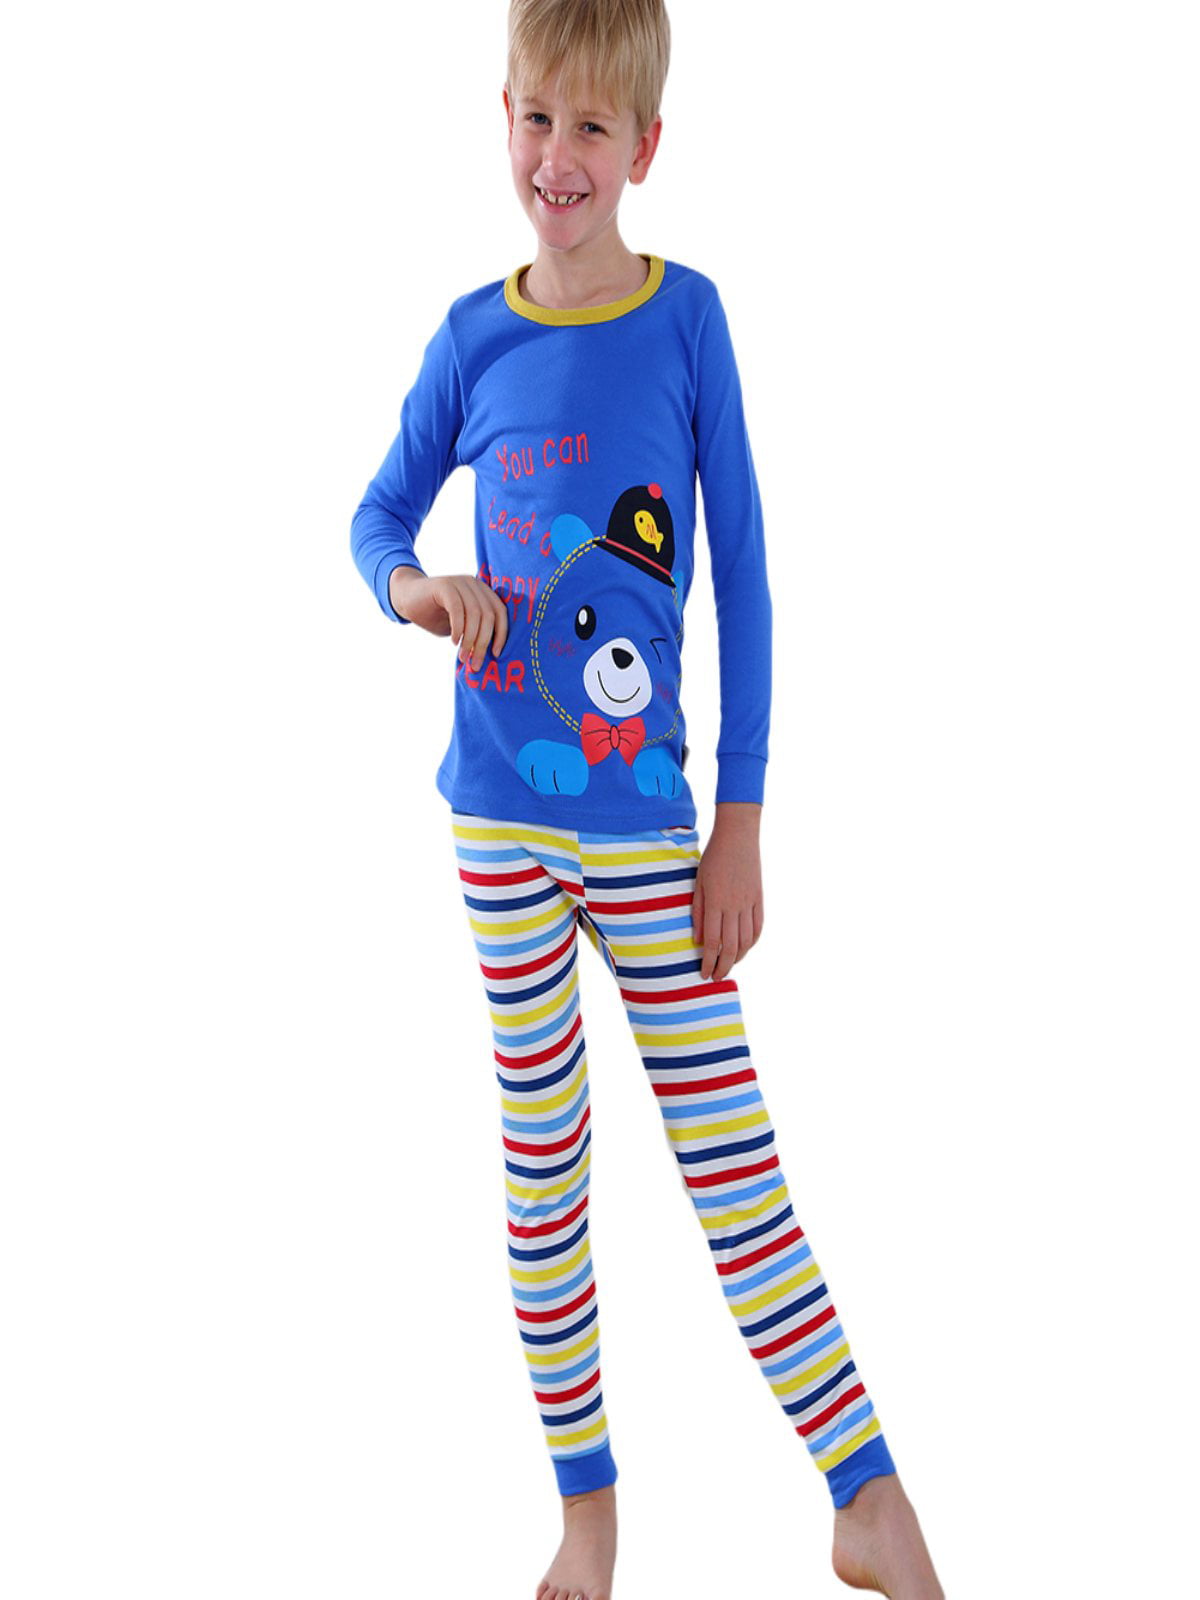 Details about   Baby Kids Toddler Boys Cartoon Top Pants Pajamas Sleepwear Nightwear Clothes Set 